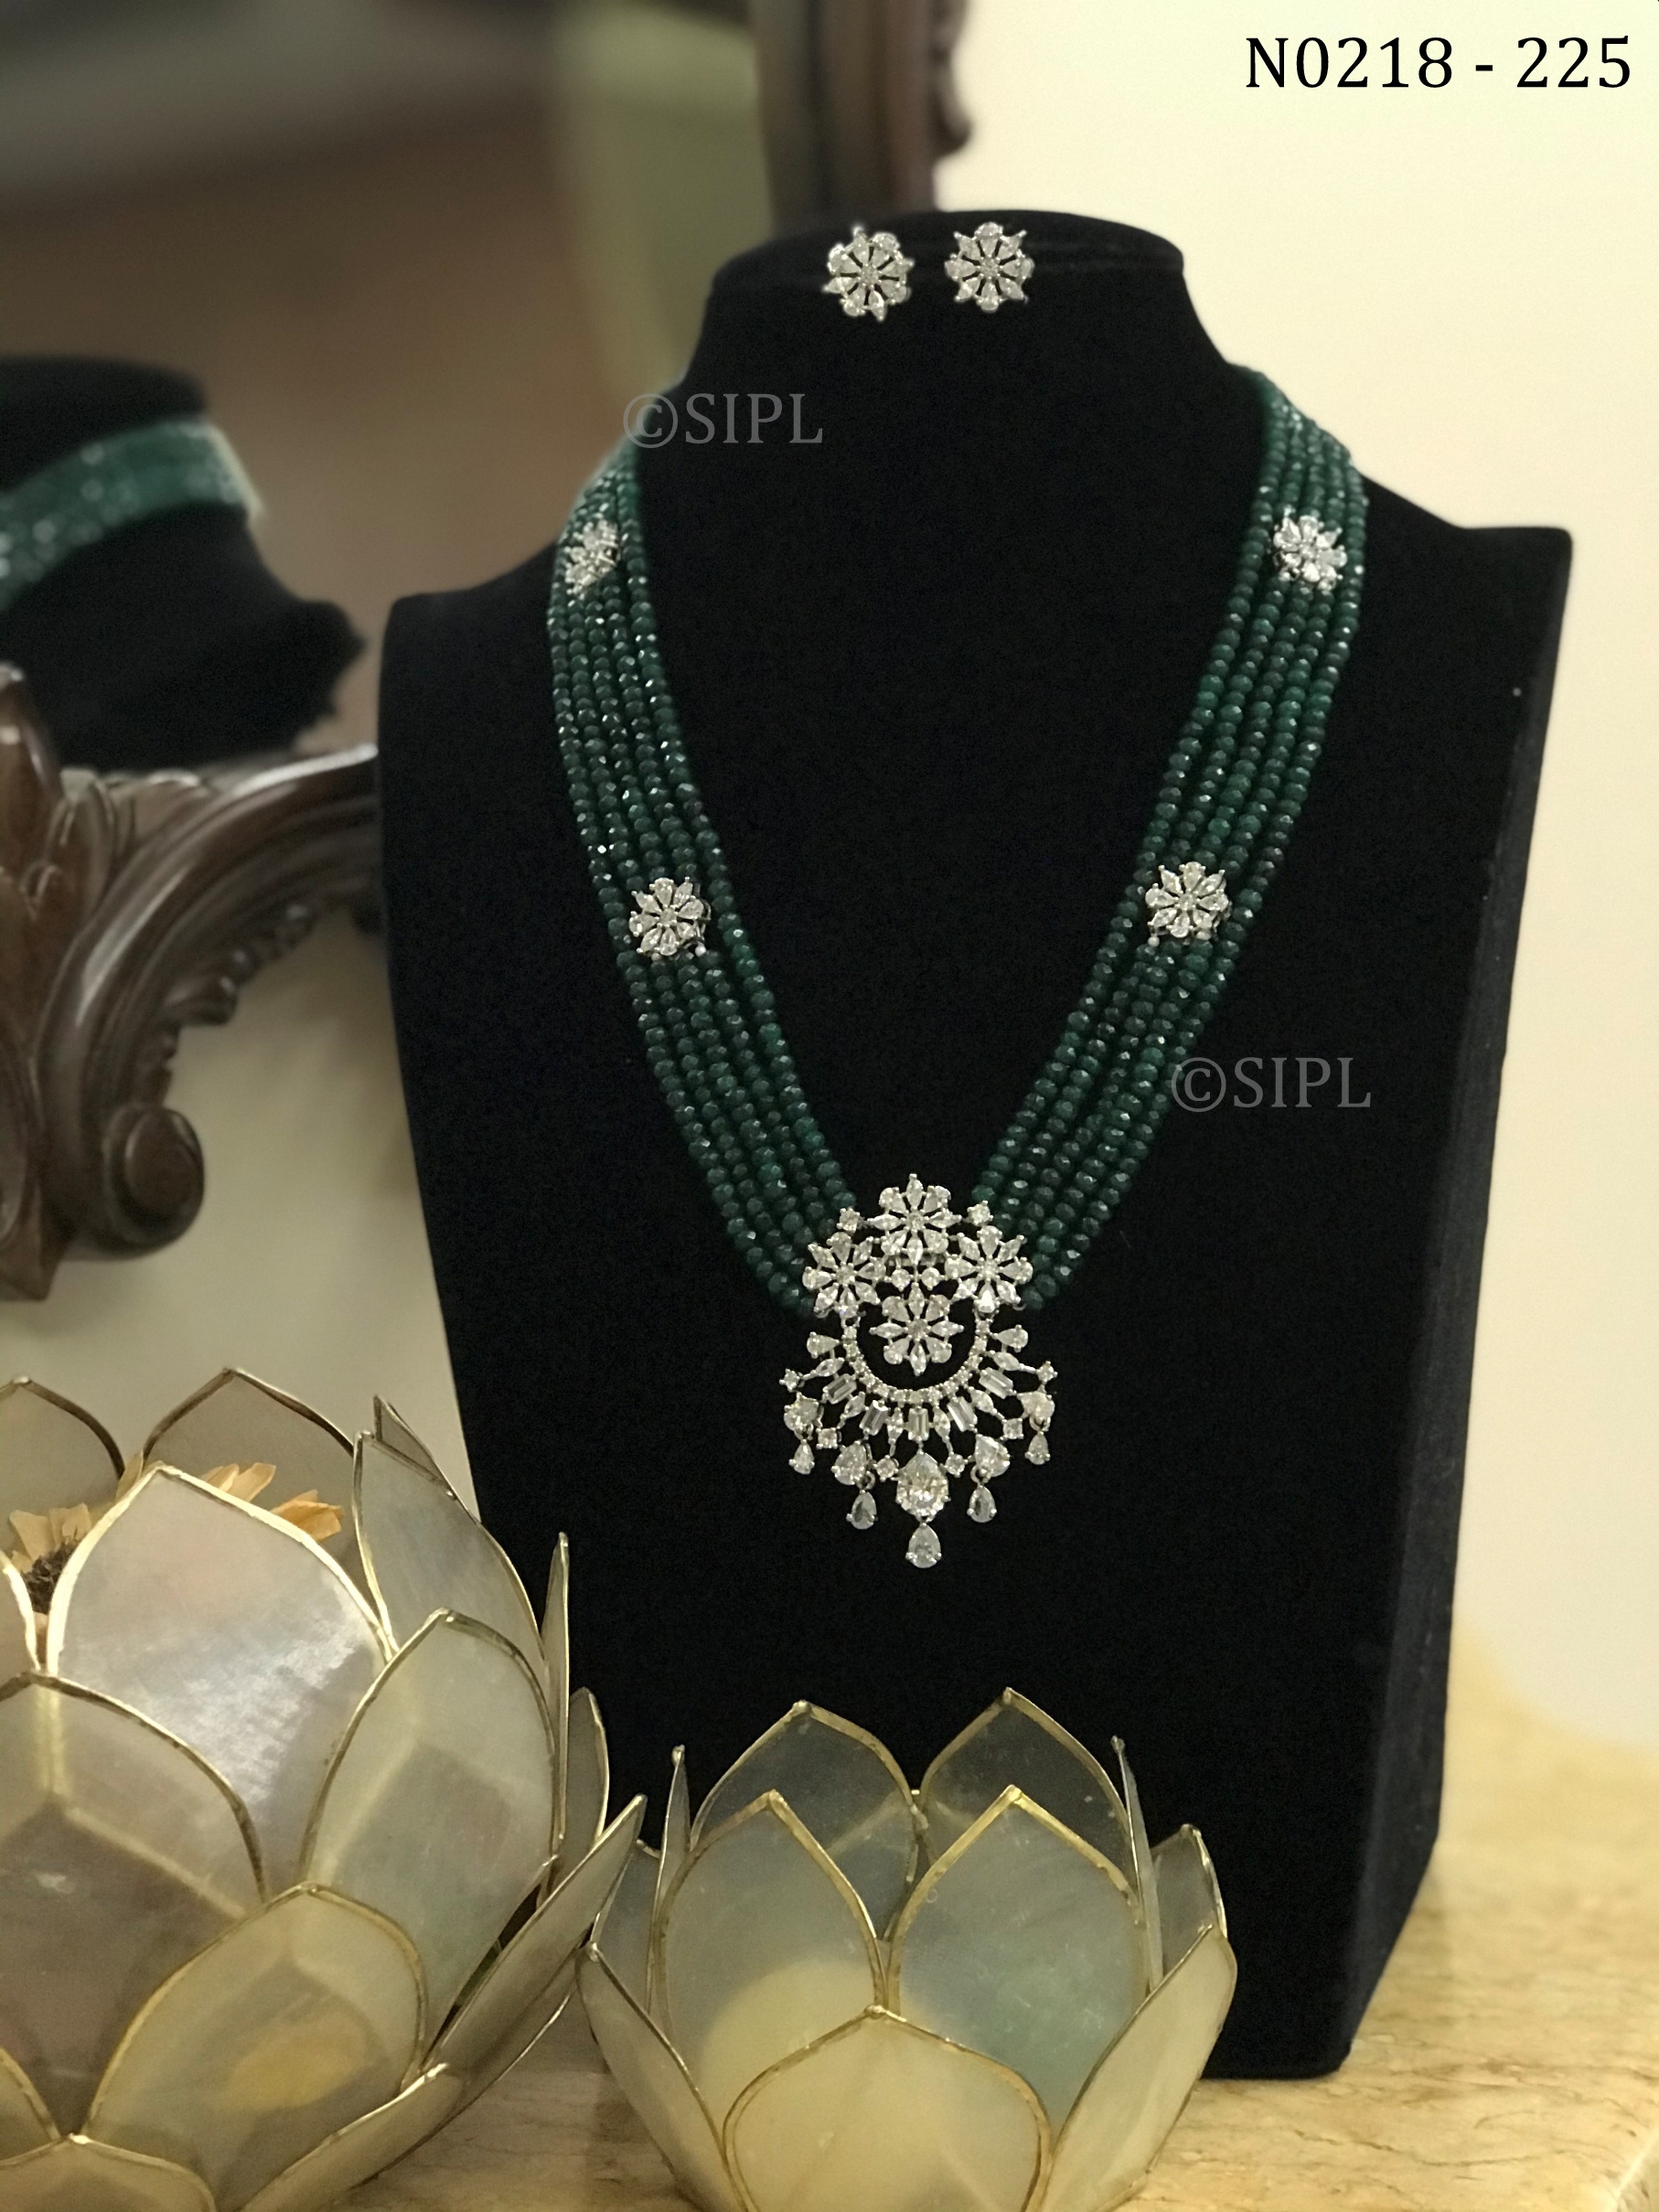 Beautiful American Diamond Necklace set